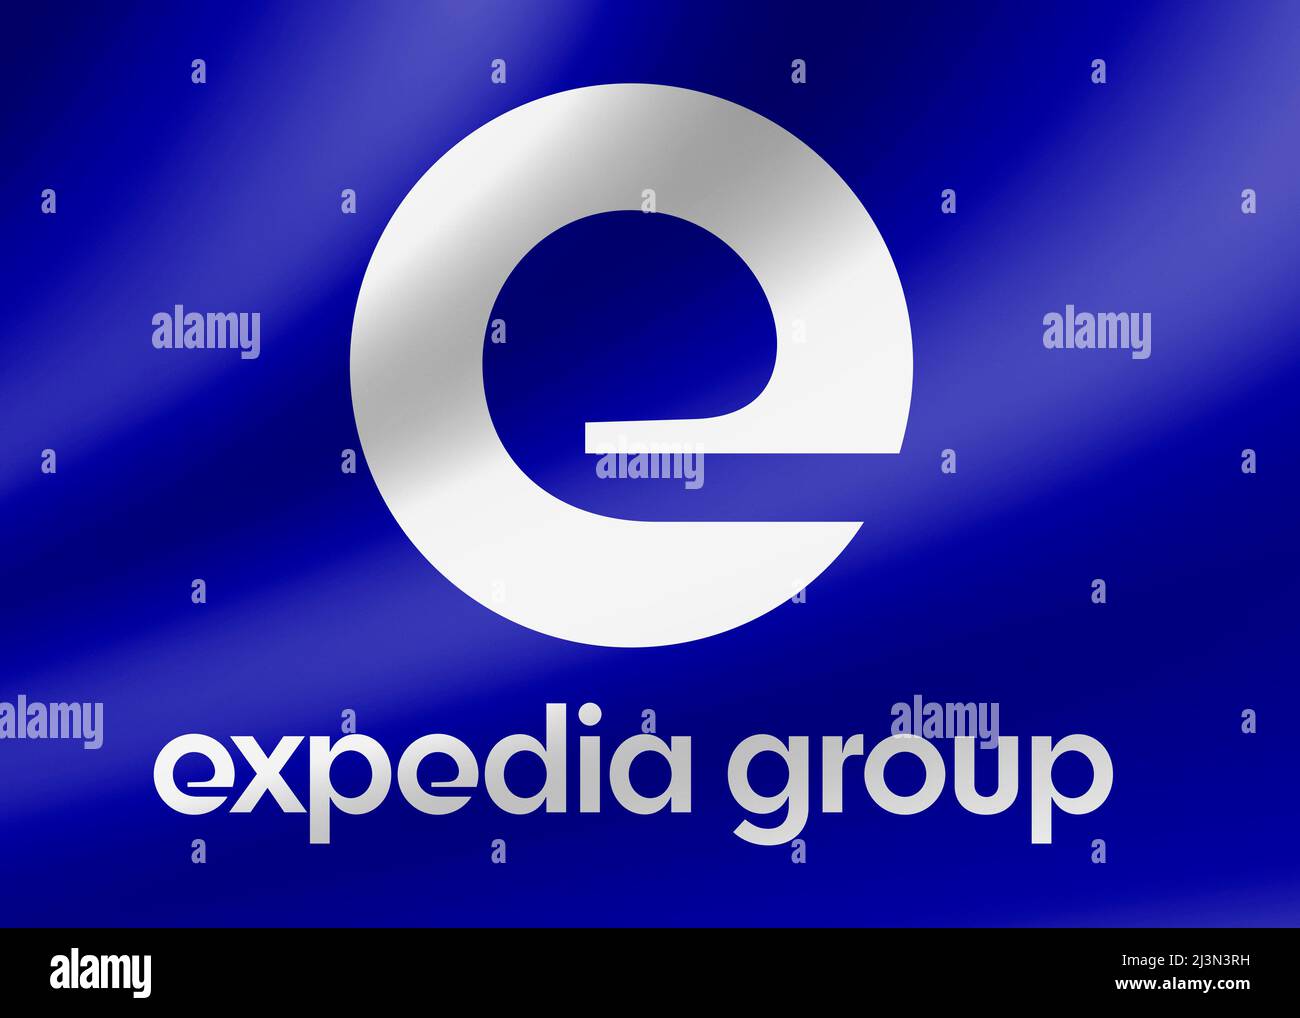 Expedia group logo Stock Photo